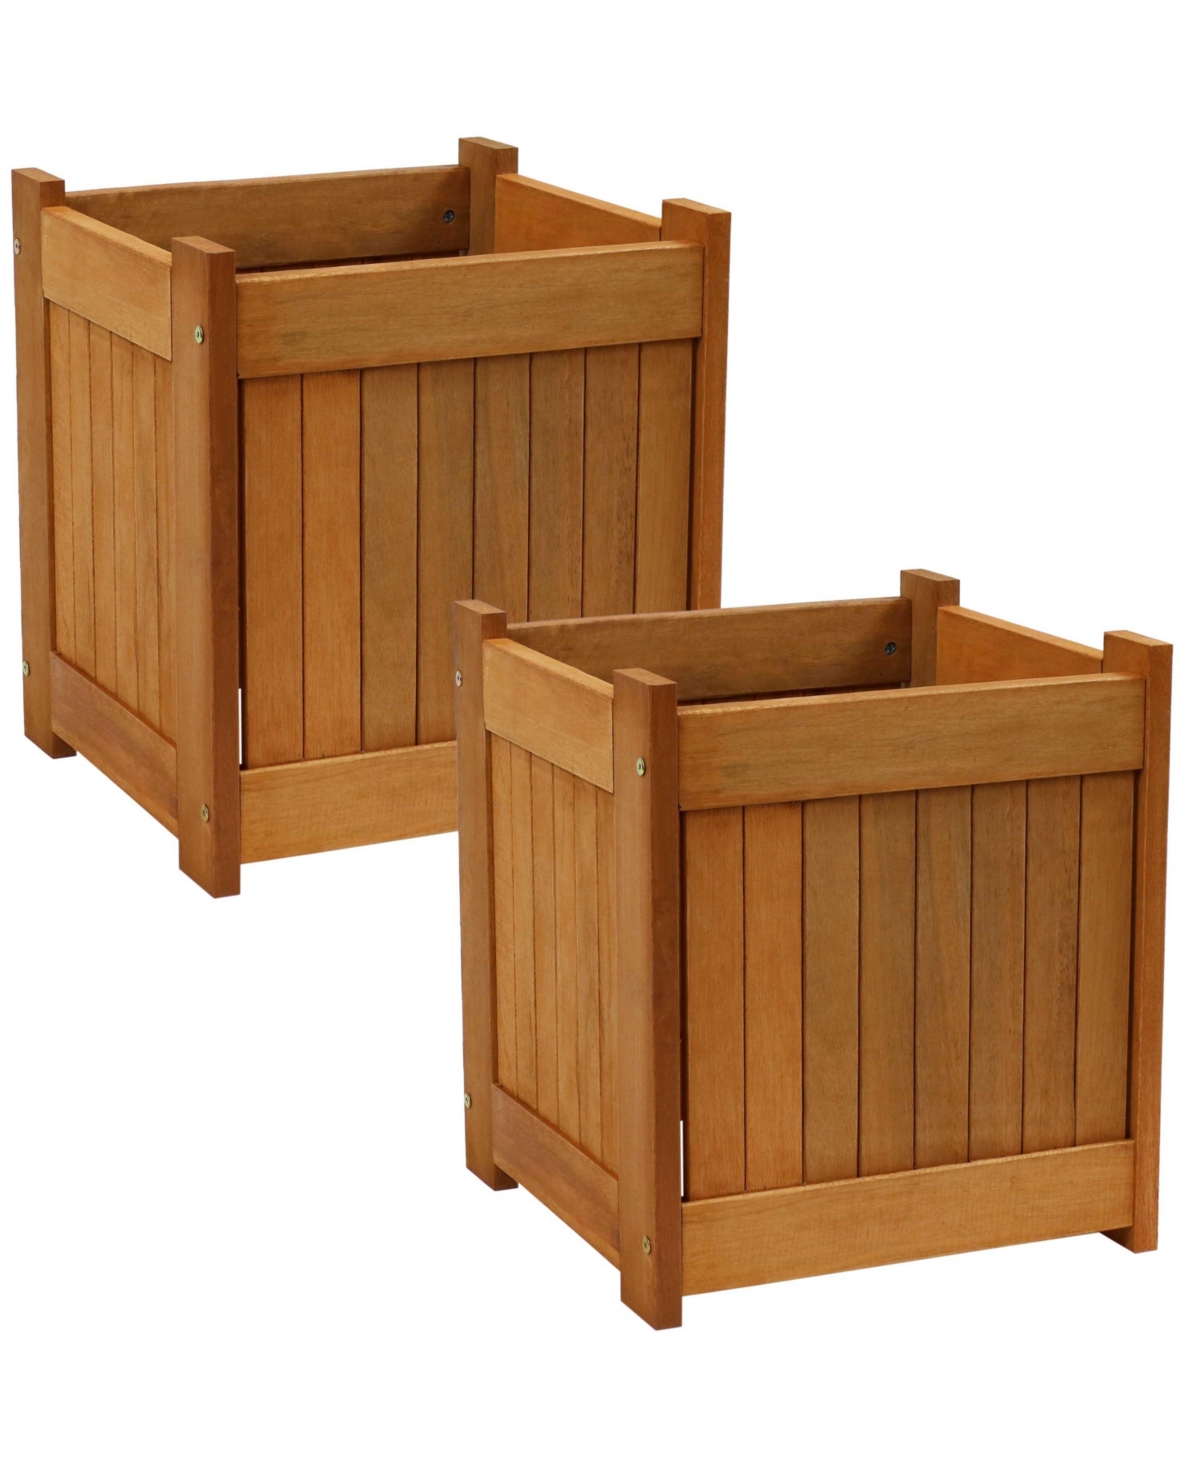 Meranti Wood Decorative Square Planter Box - 16 in - Set of 2 - Brown